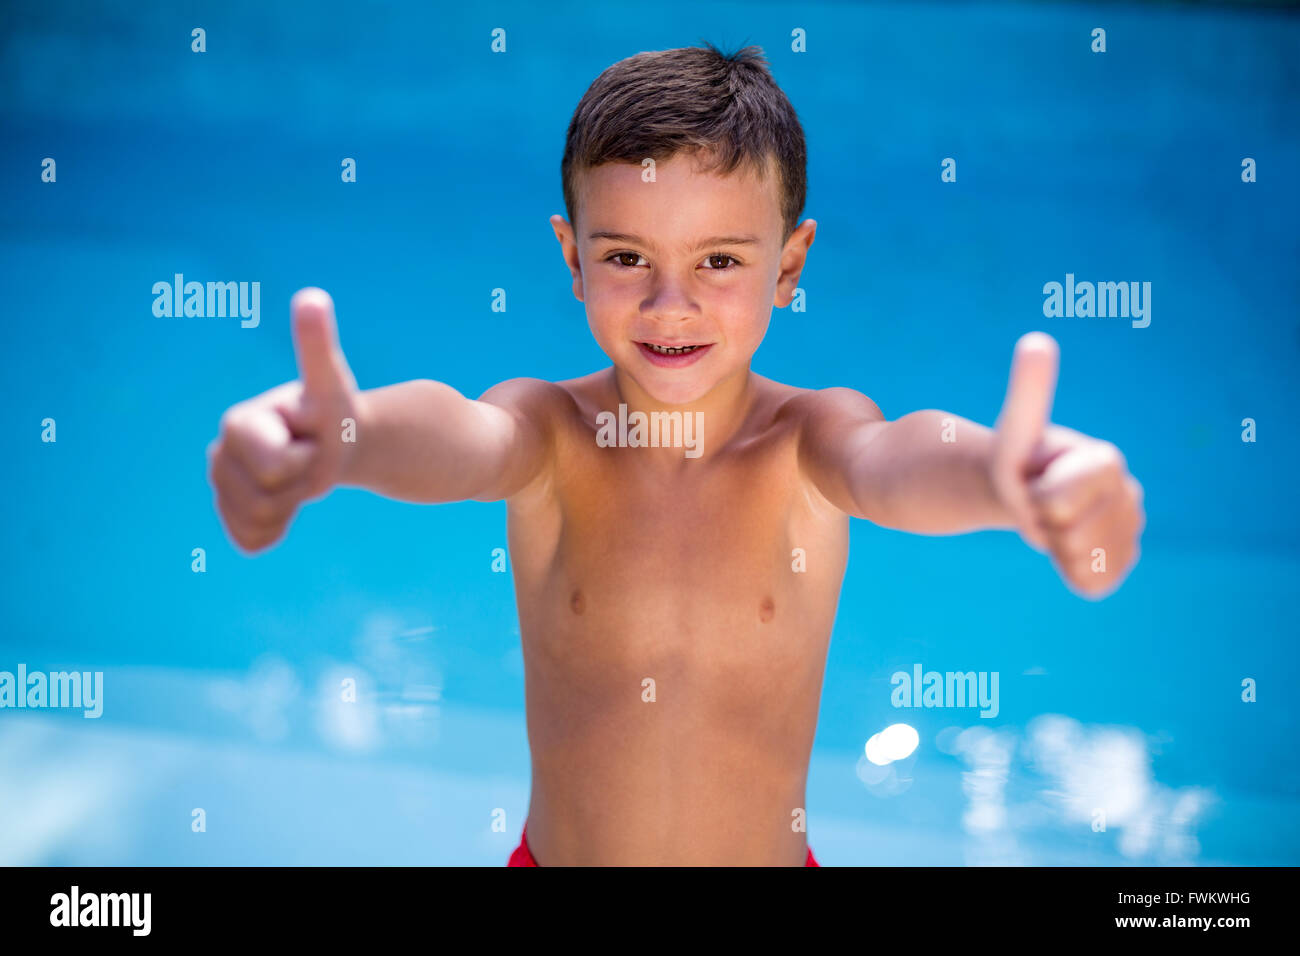 Nackter Oberk Rper Junge Gestikulieren Am Pool Stockfoto Bild